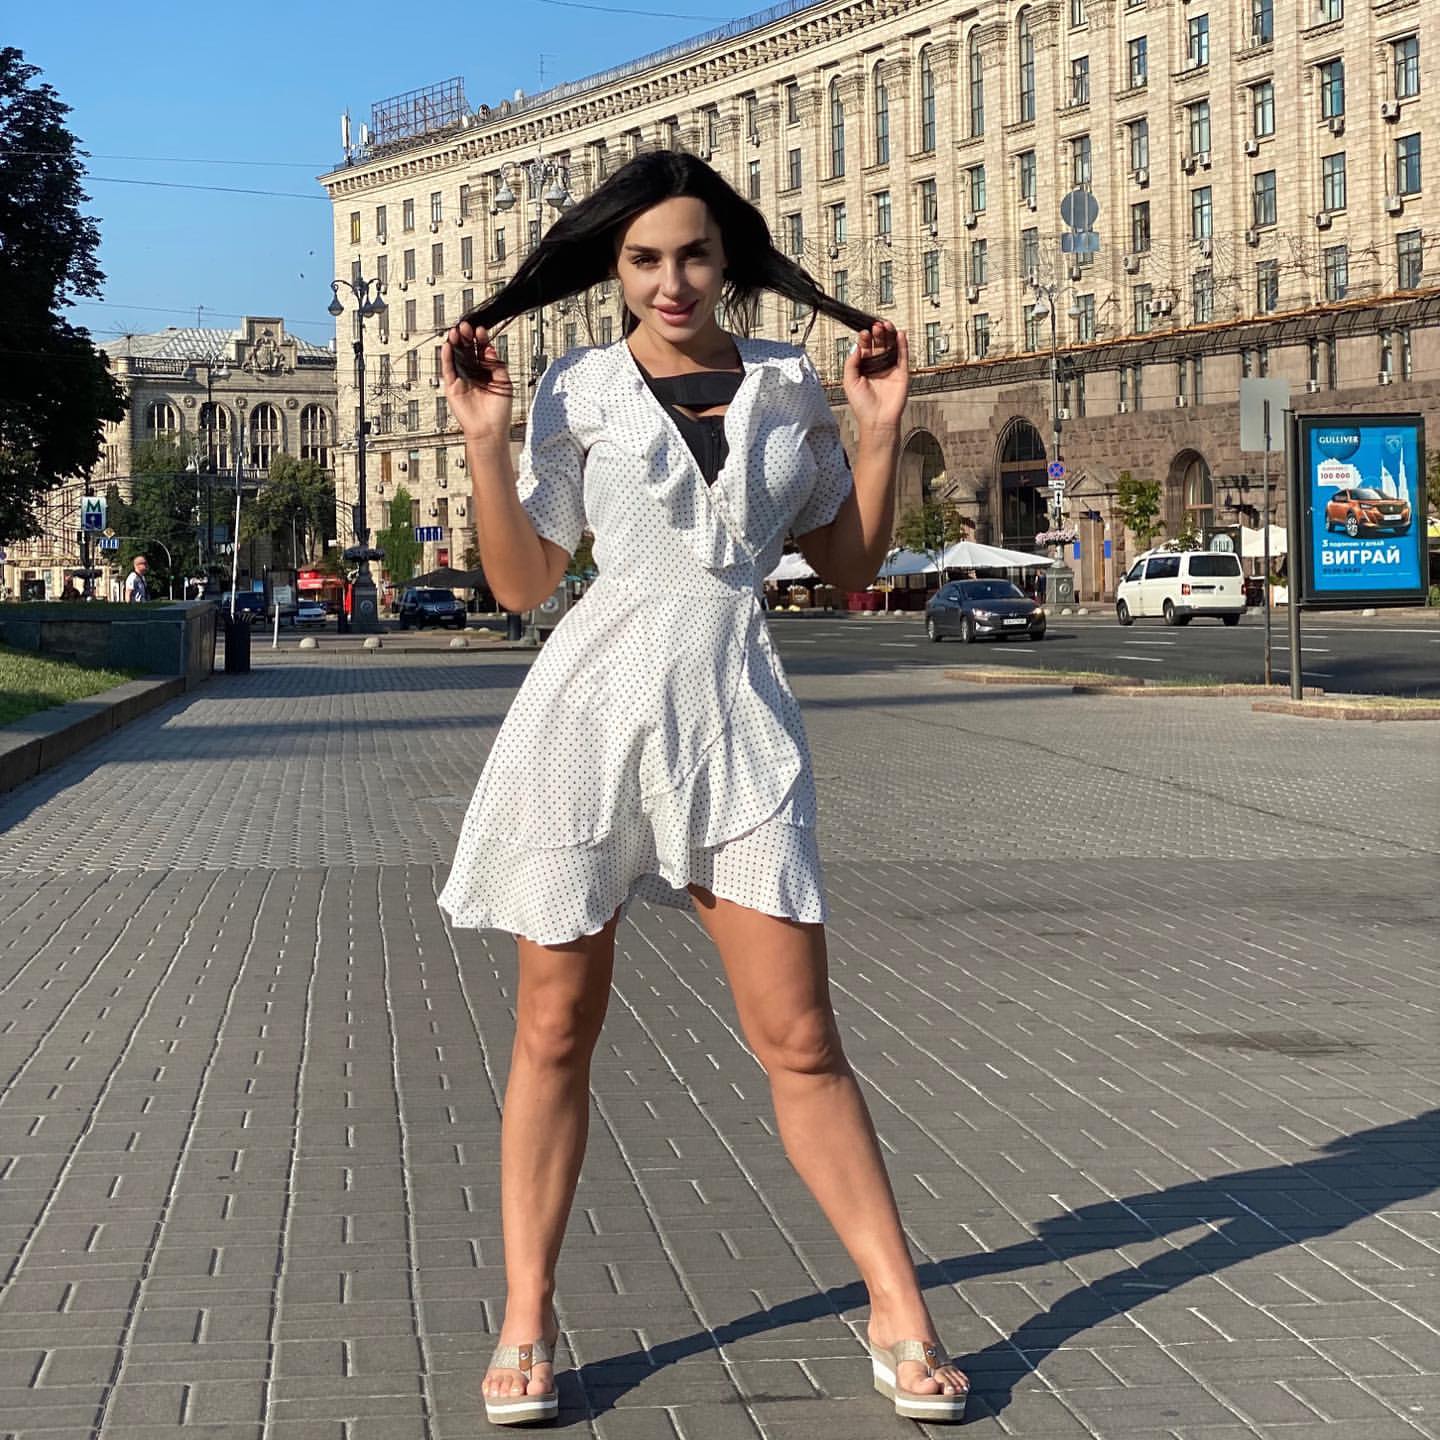 Russian babe katerina onlyfans bitch slut-arsivizm gallery